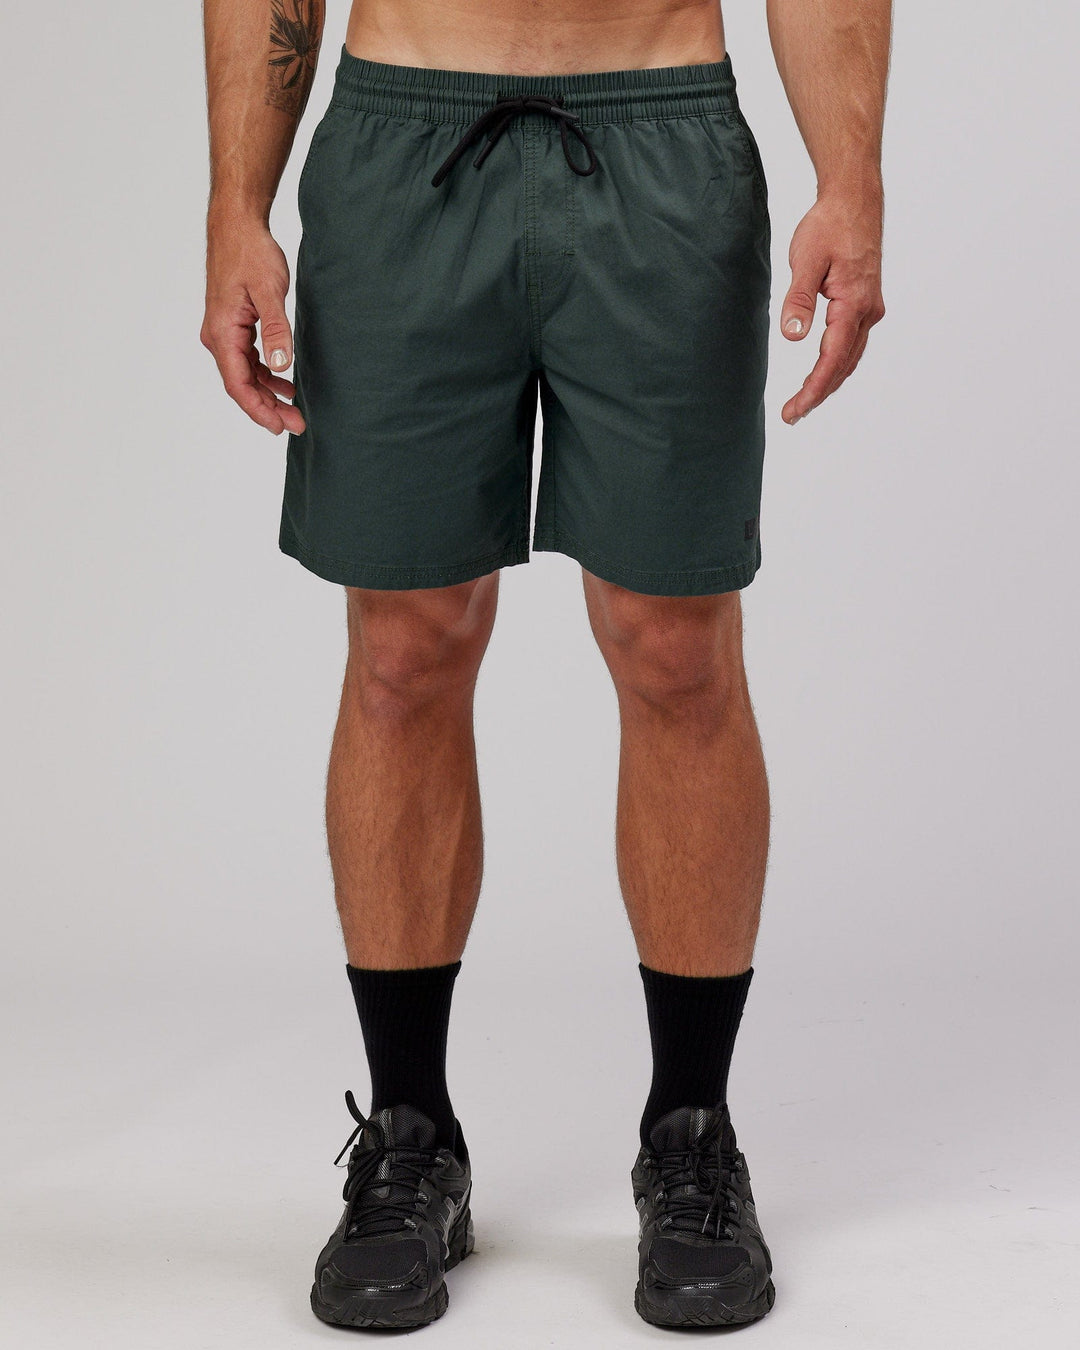 Man wearing Daily Short - Vital Green